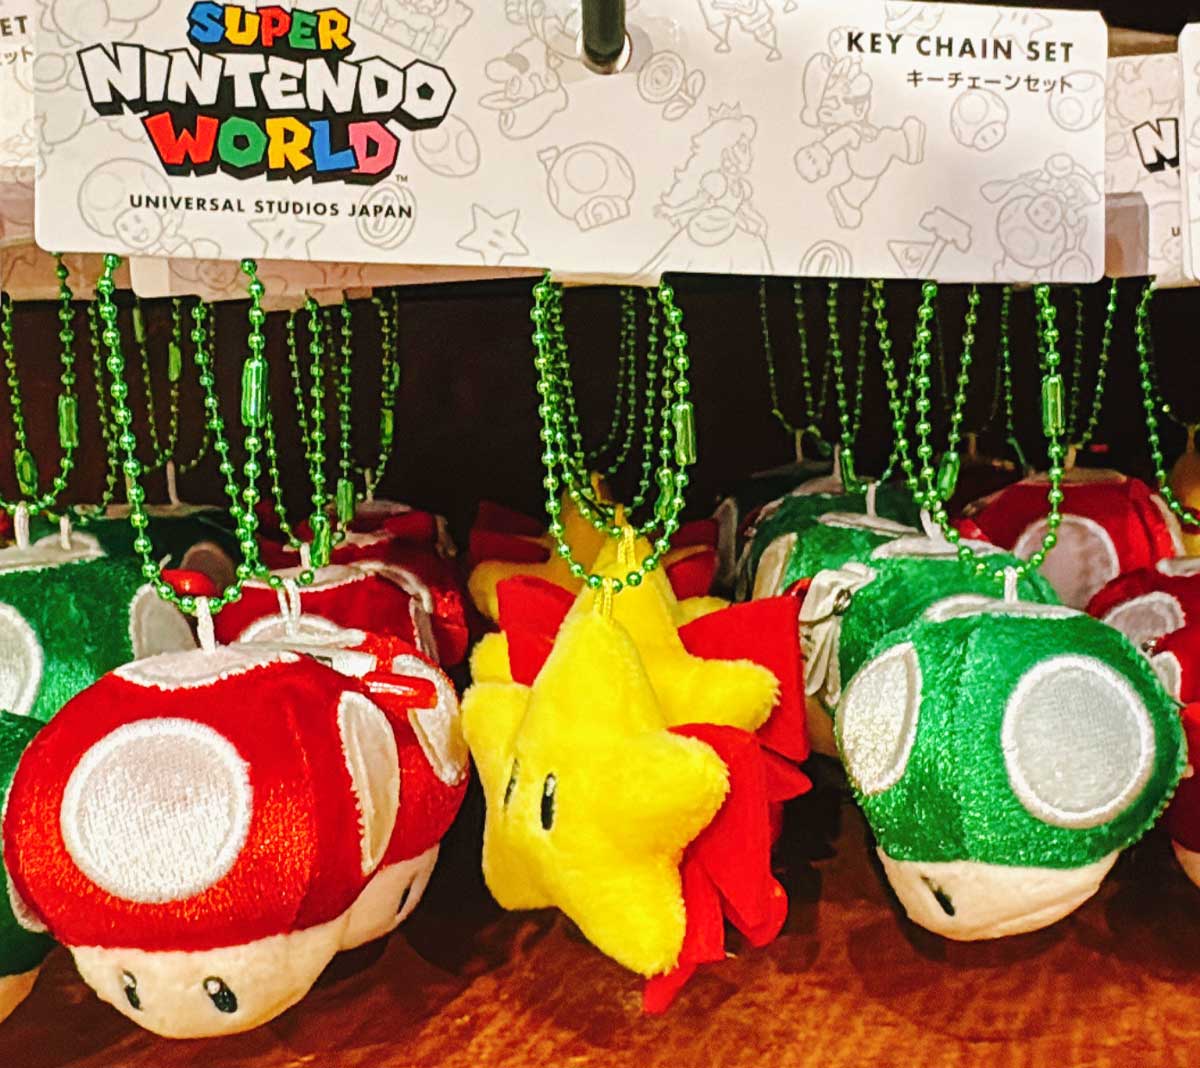 Mario Key Chain set